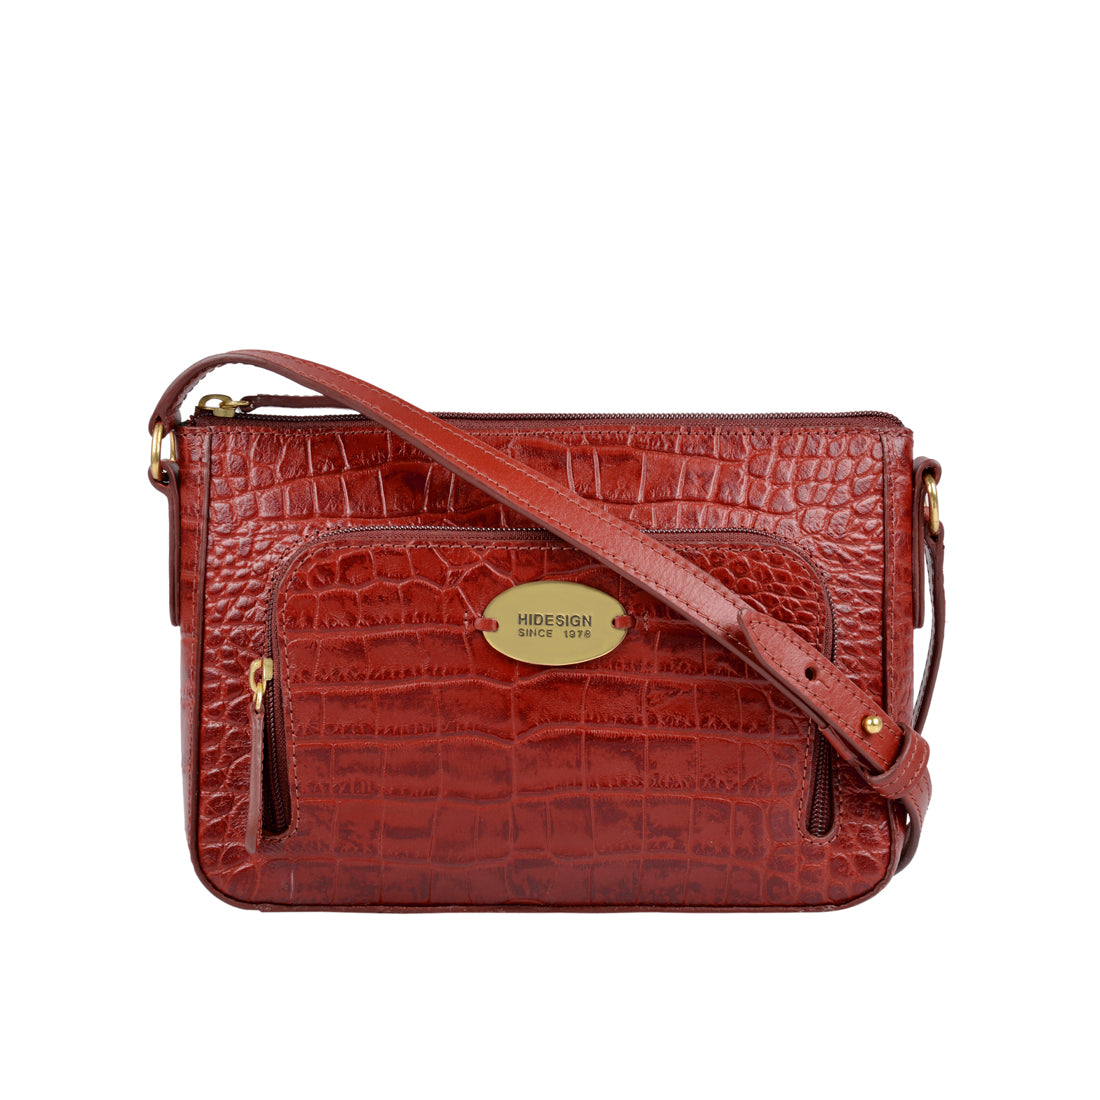 Buy HIDESIGN Women Red Sling Bag MARSALA Online @ Best Price in